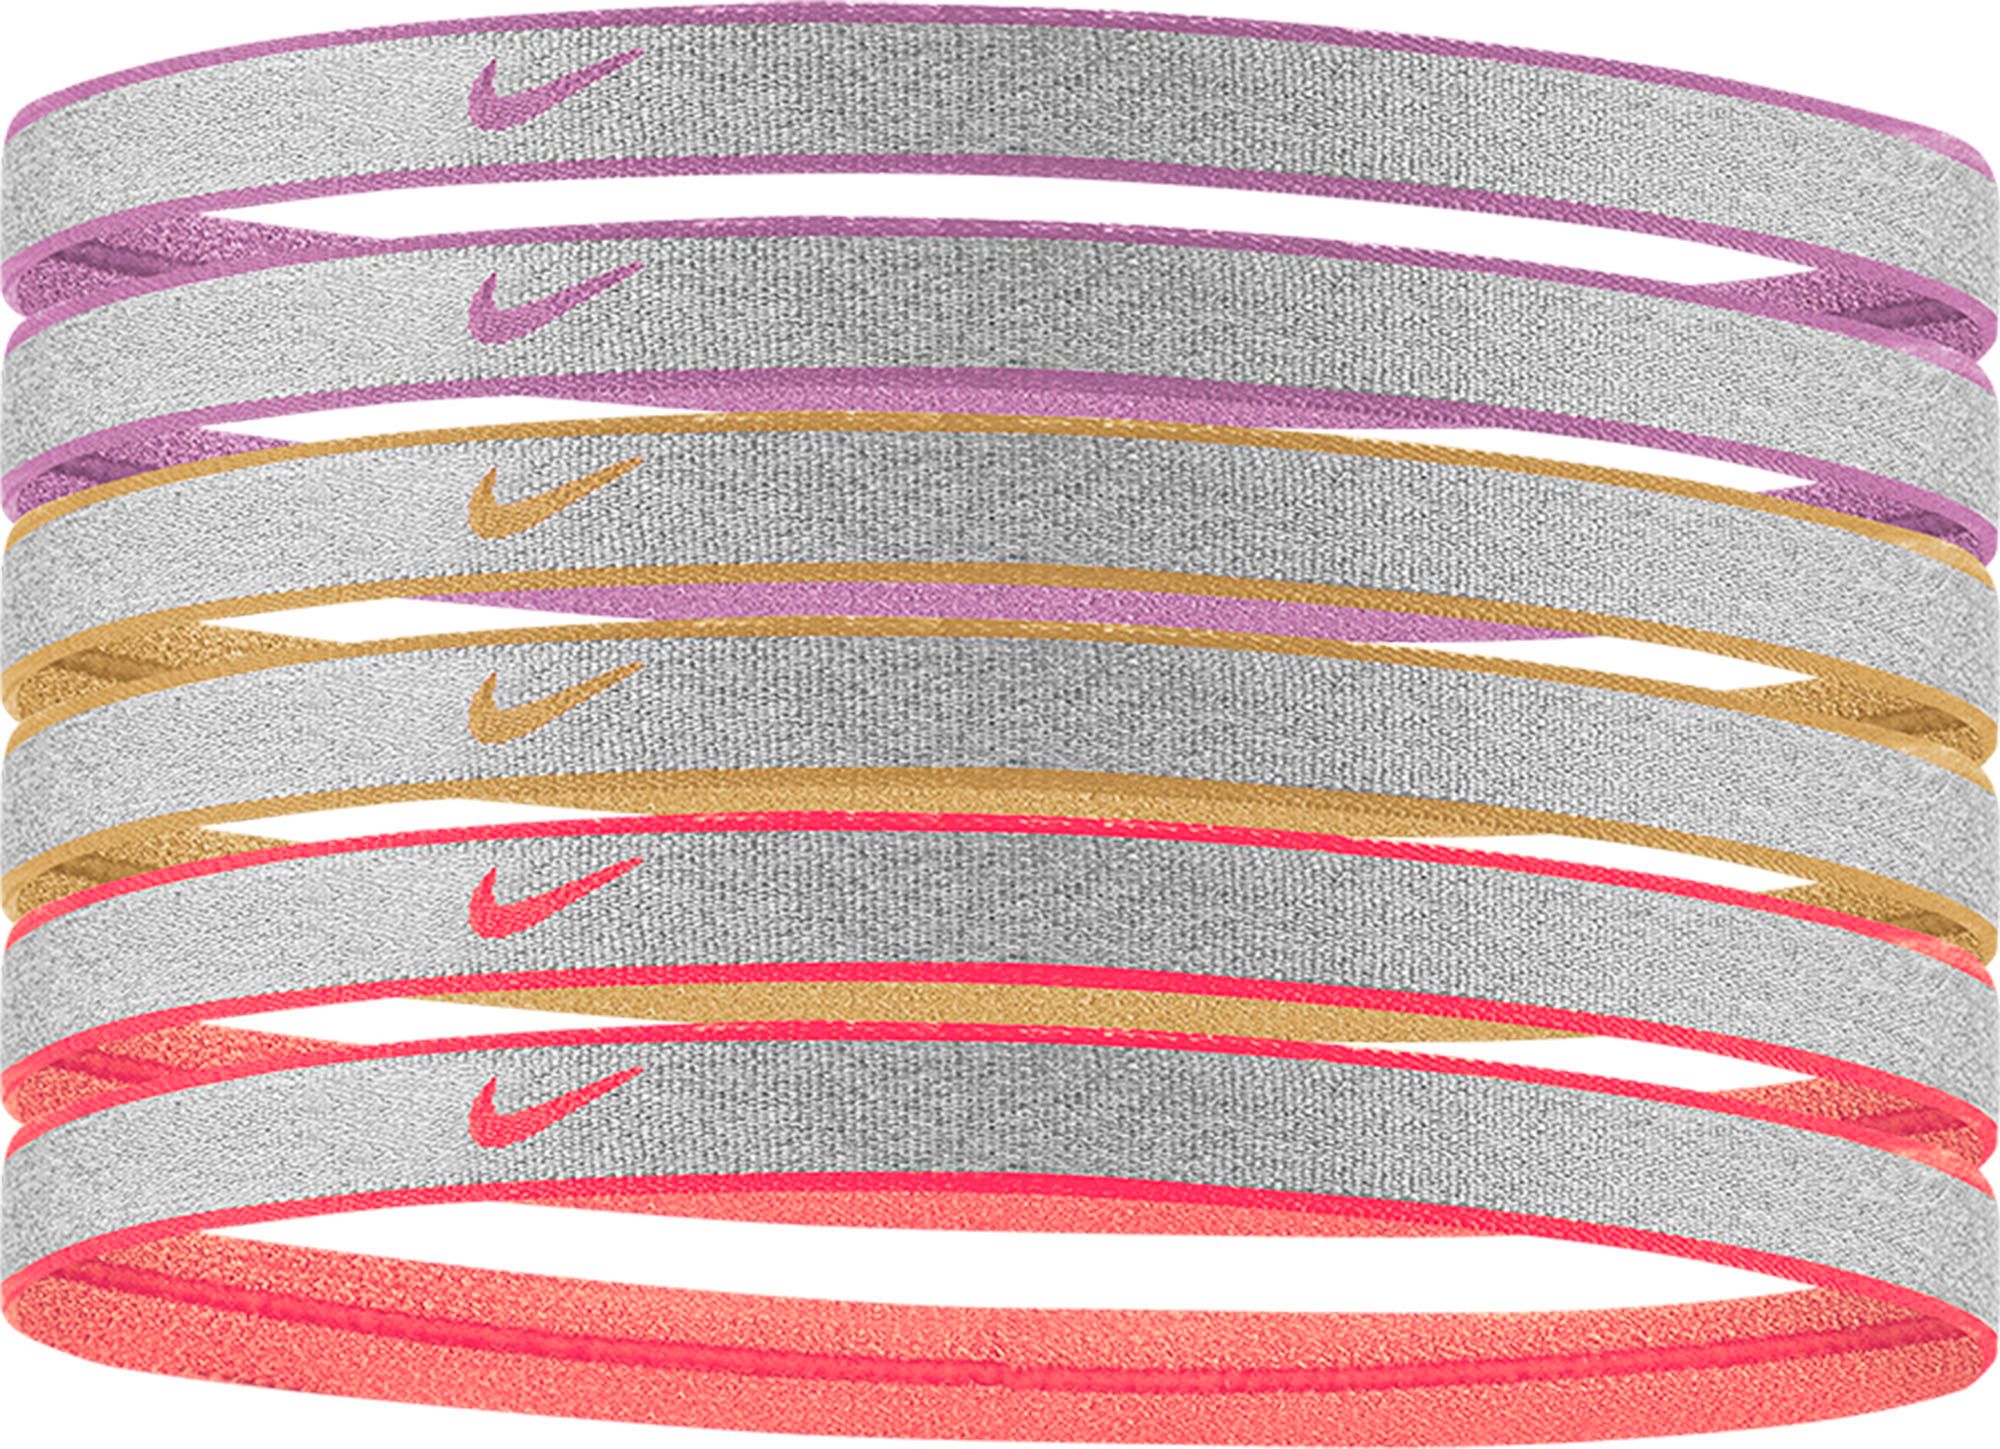 Nike Headbands | Best Price Guarantee at DICK'S